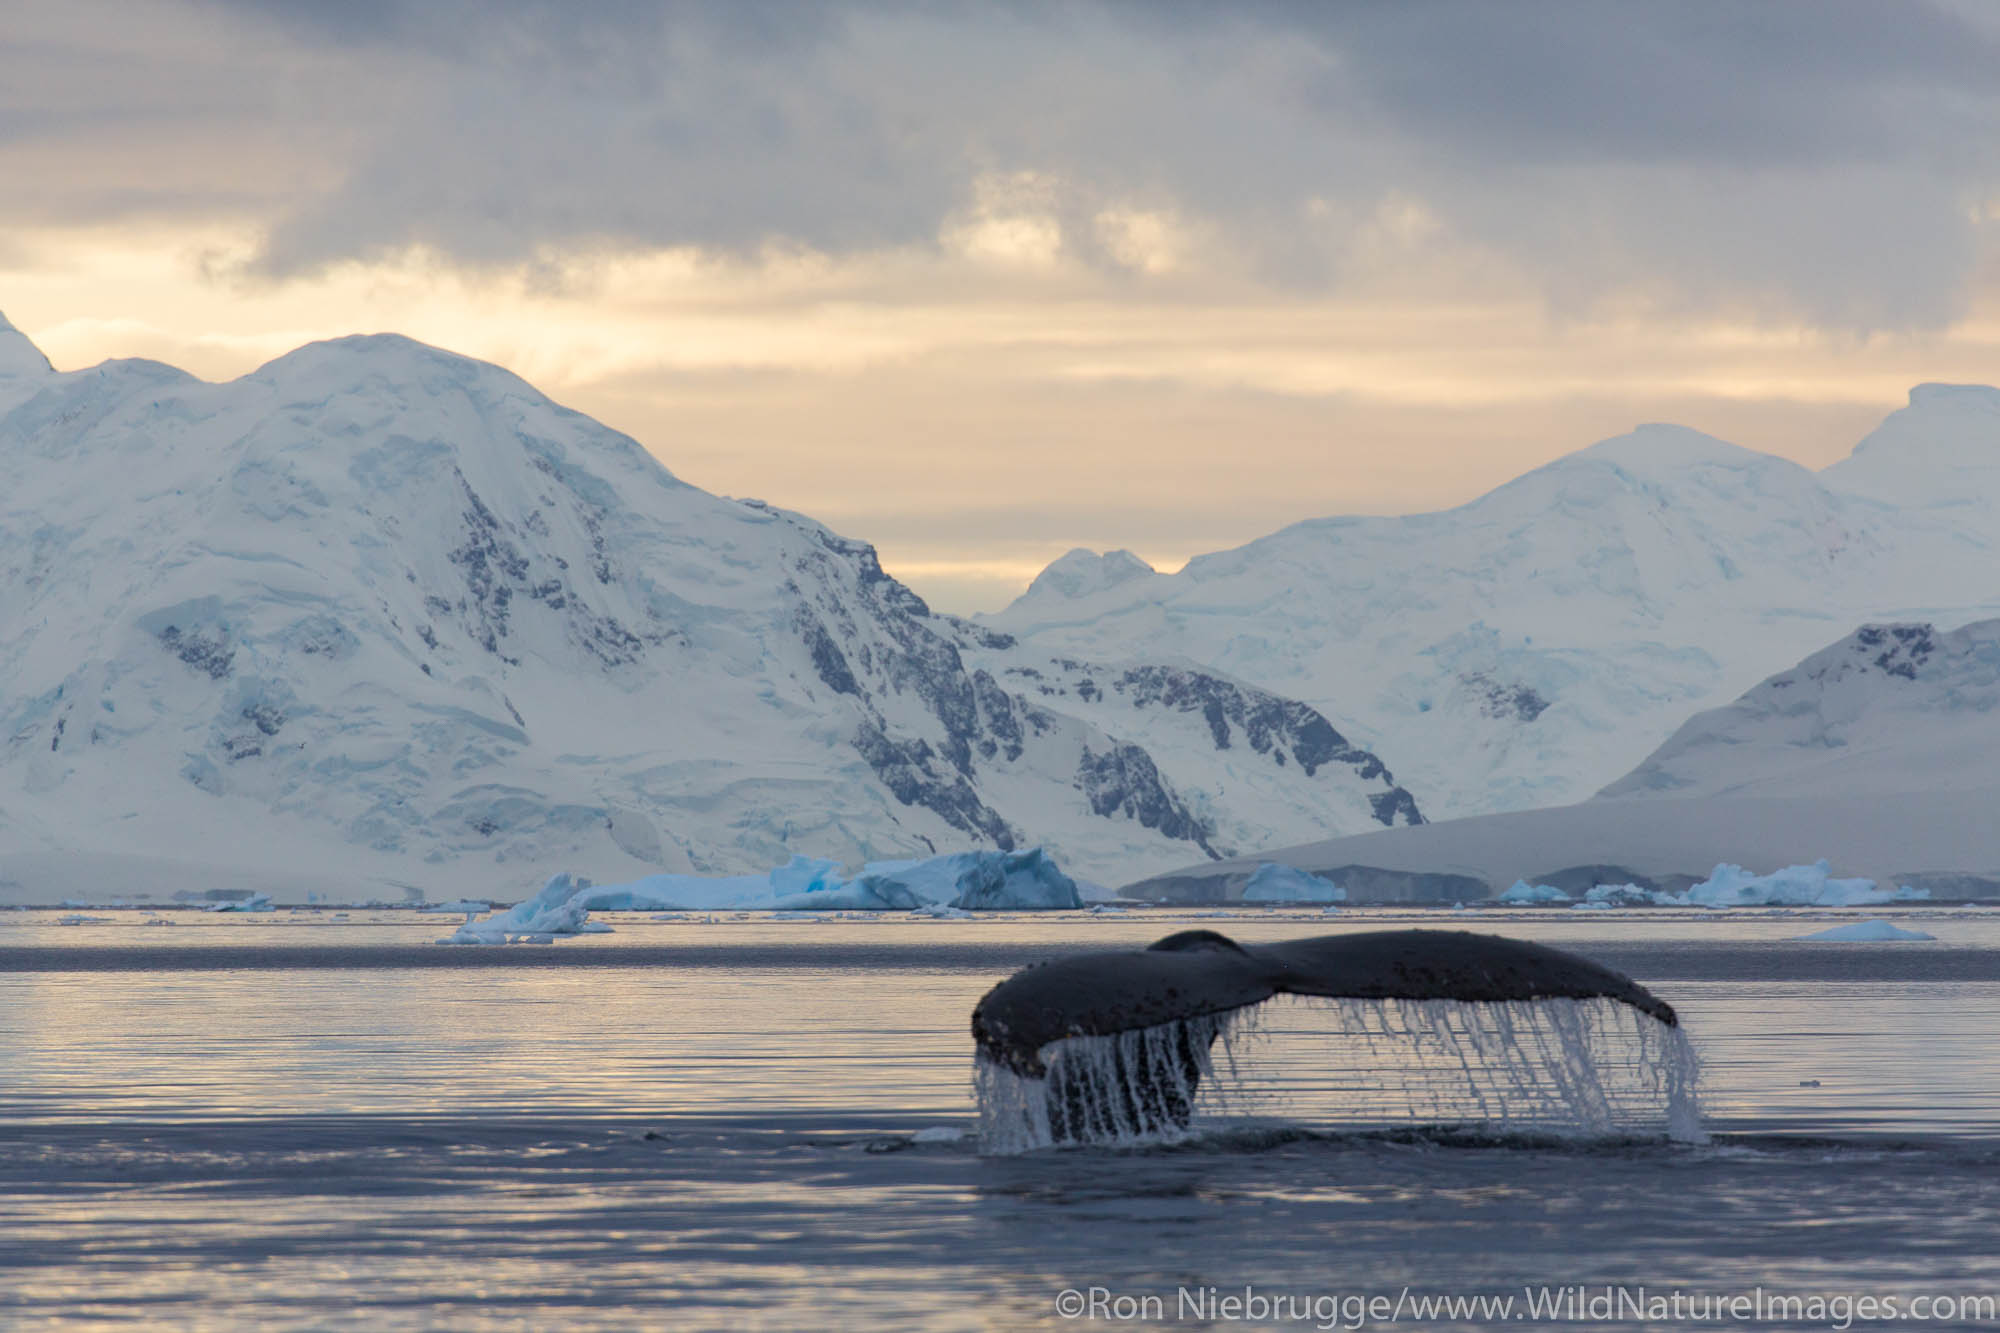 Humpback Whale in Wilhelmina Bay, Antarctica.